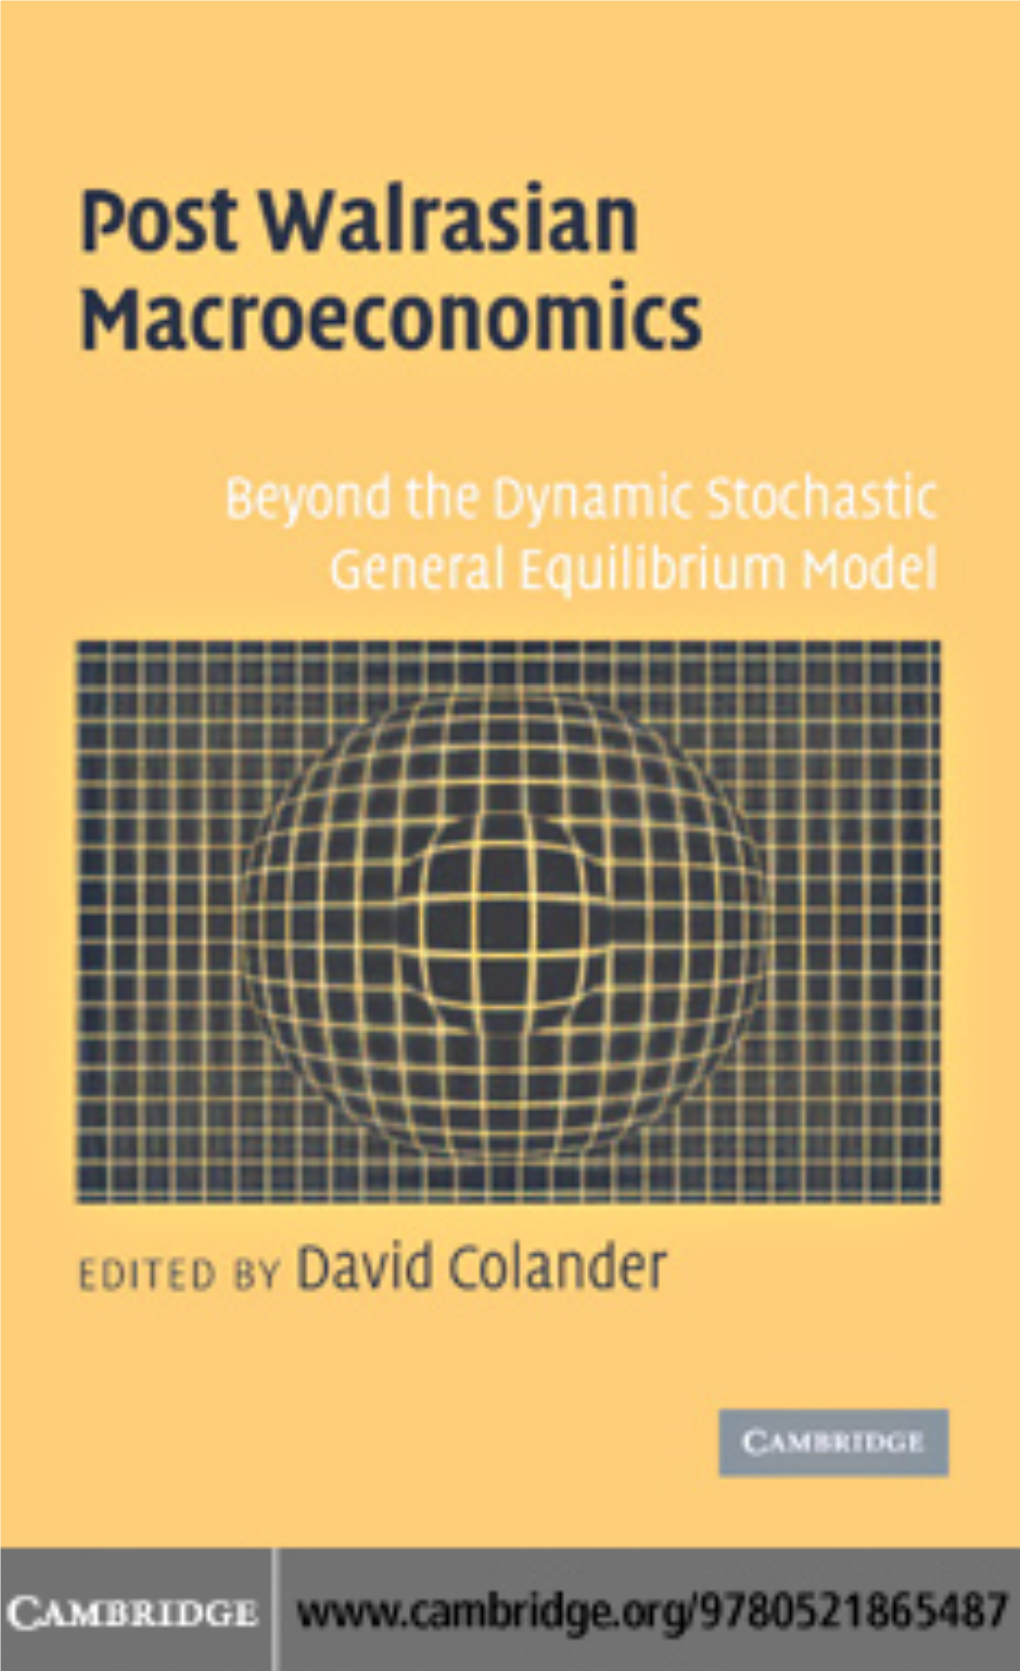 Post Walrasian Macroeconomics: Beyond the Dynamic Stochastic